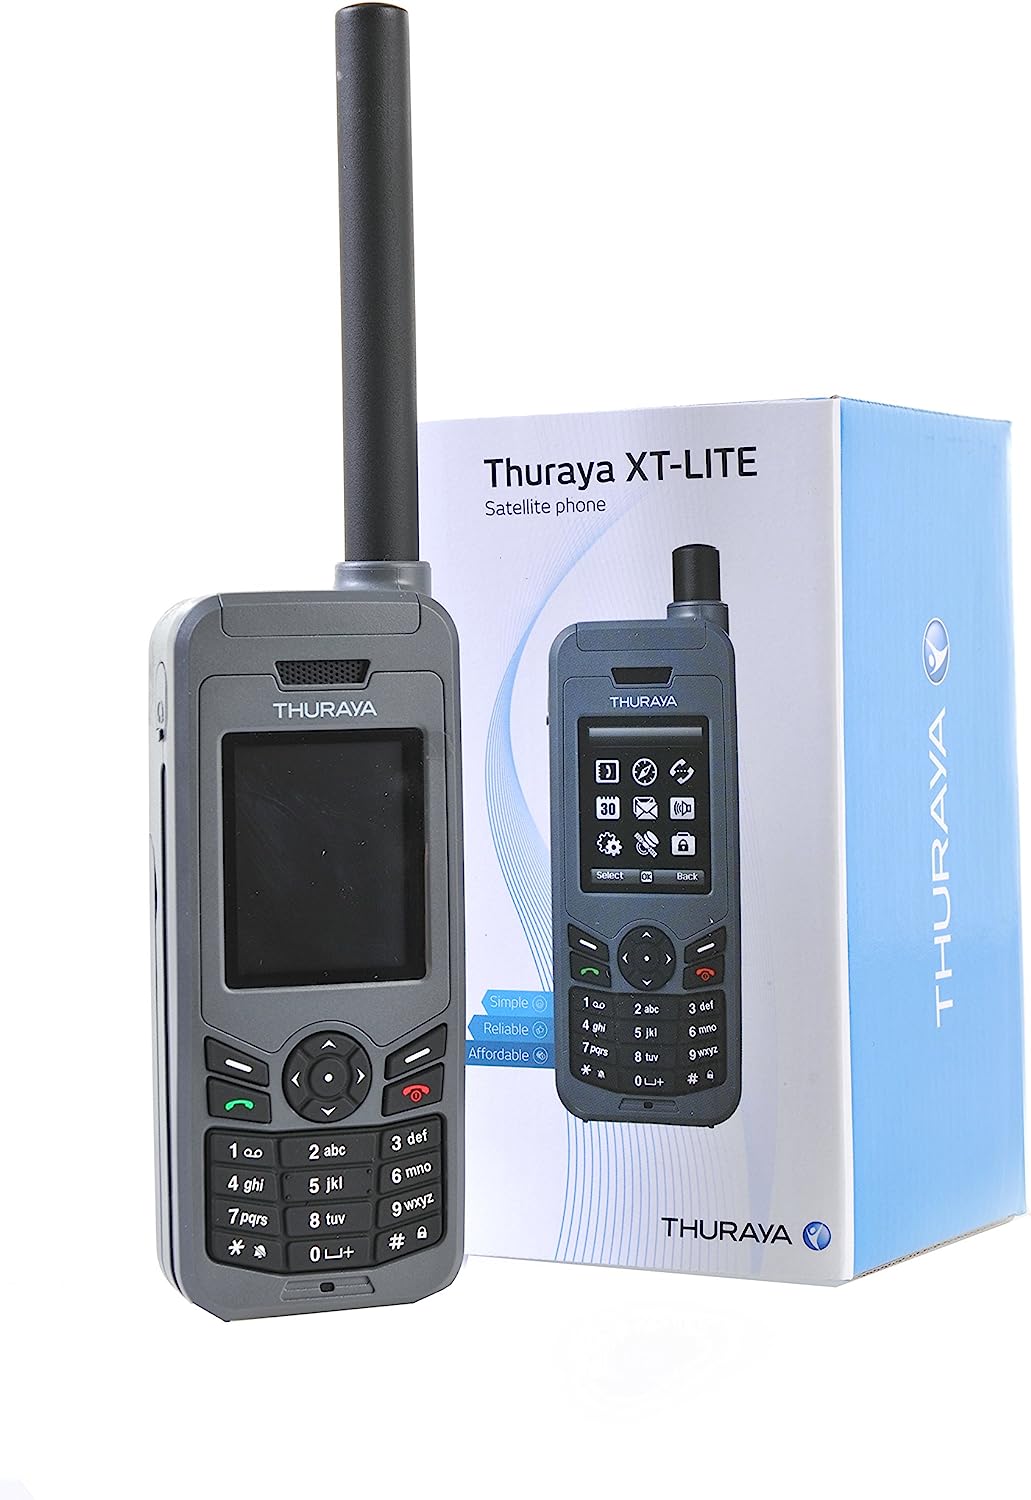 Téléphone satellite débloqué Thuraya XT-LITE 32 Go 160 pays